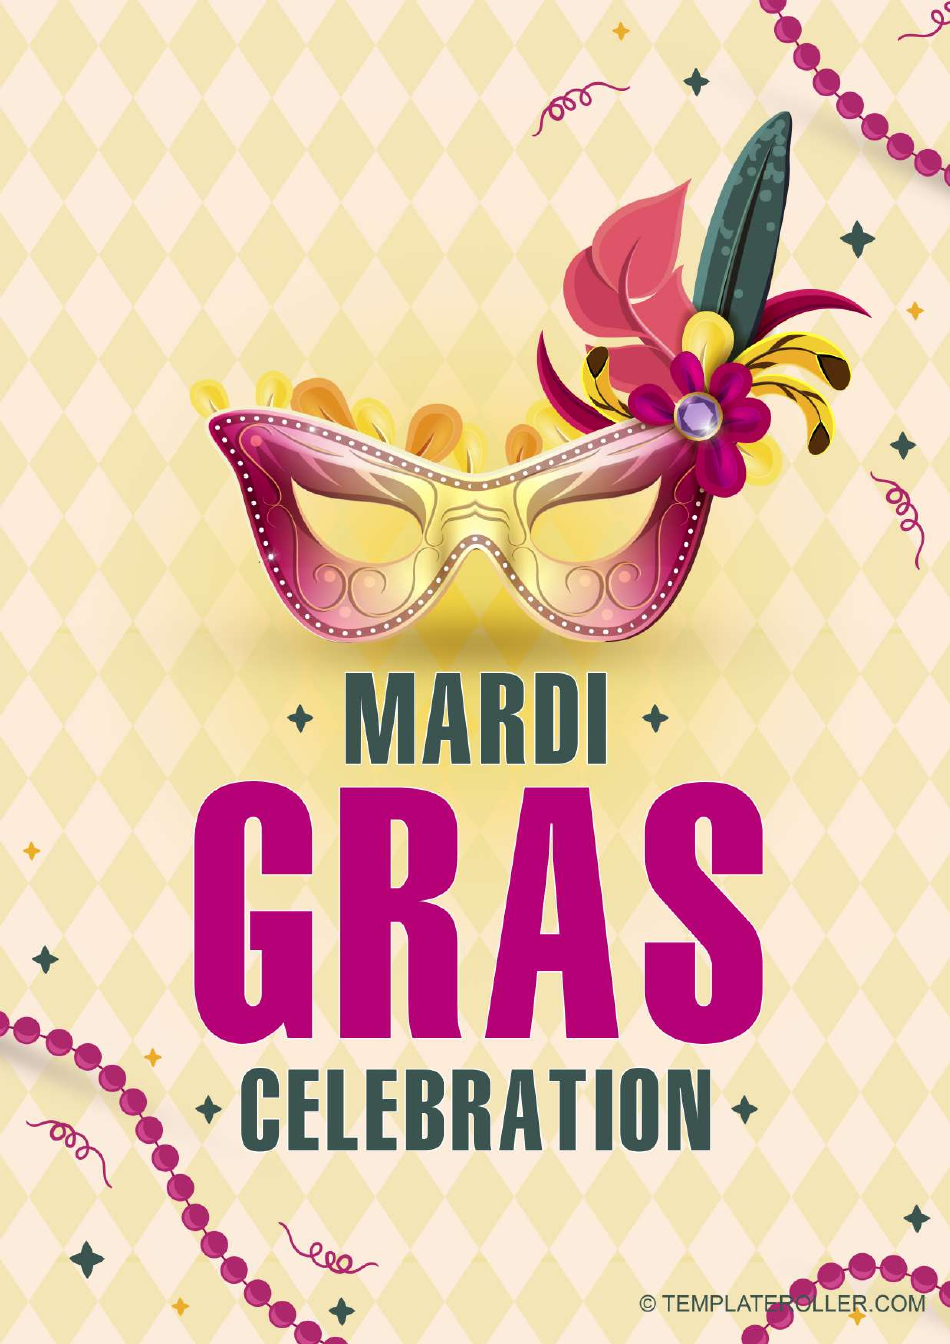 Mardi Gras Poster Template - Yellow